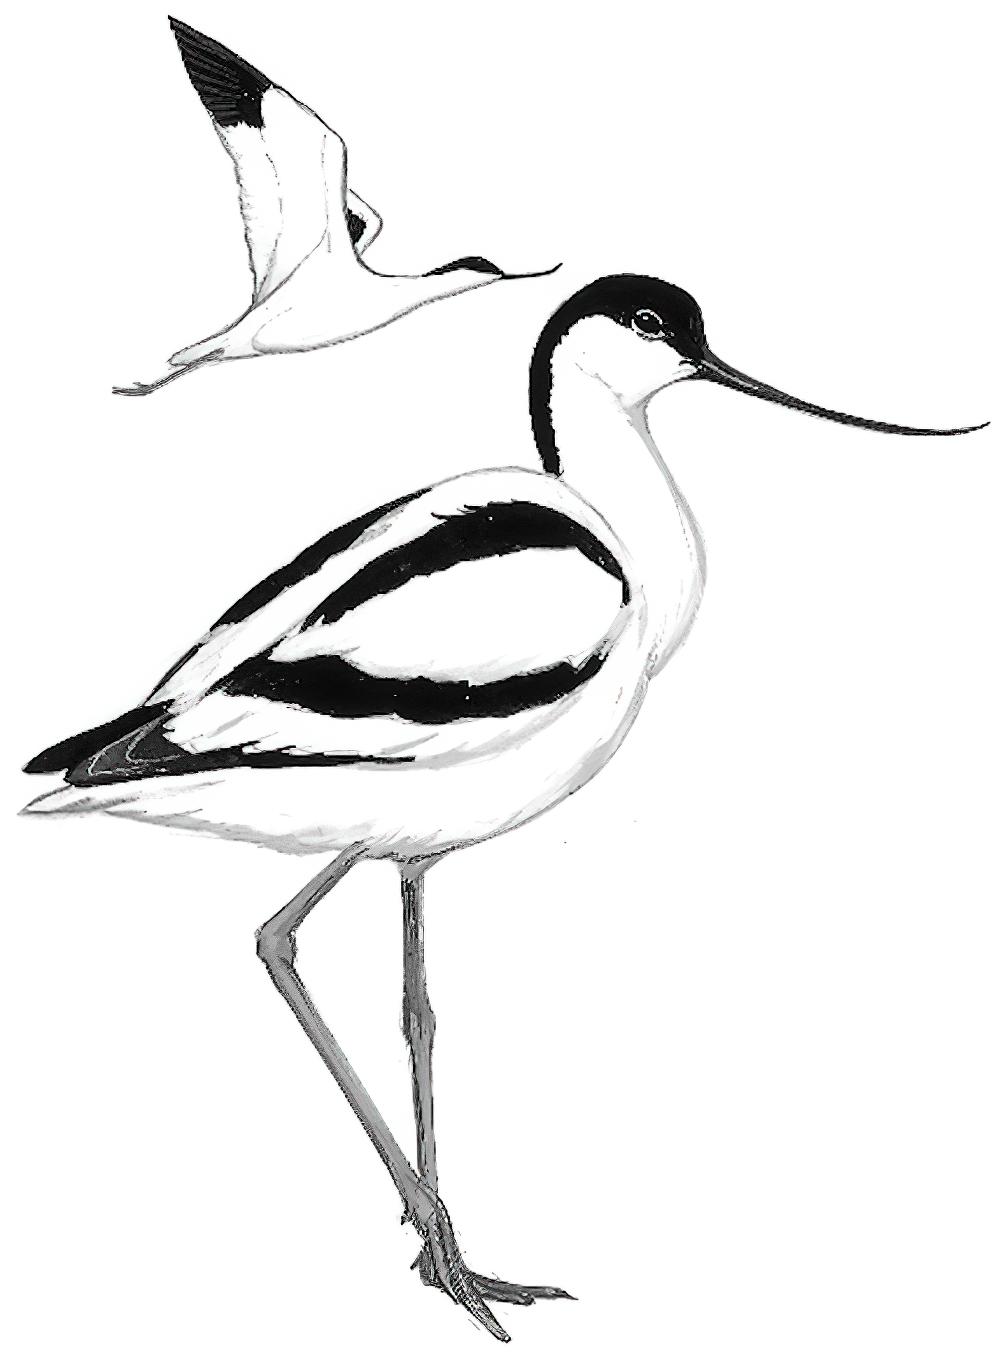 反嘴鹬 / Pied Avocet / Recurvirostra avosetta